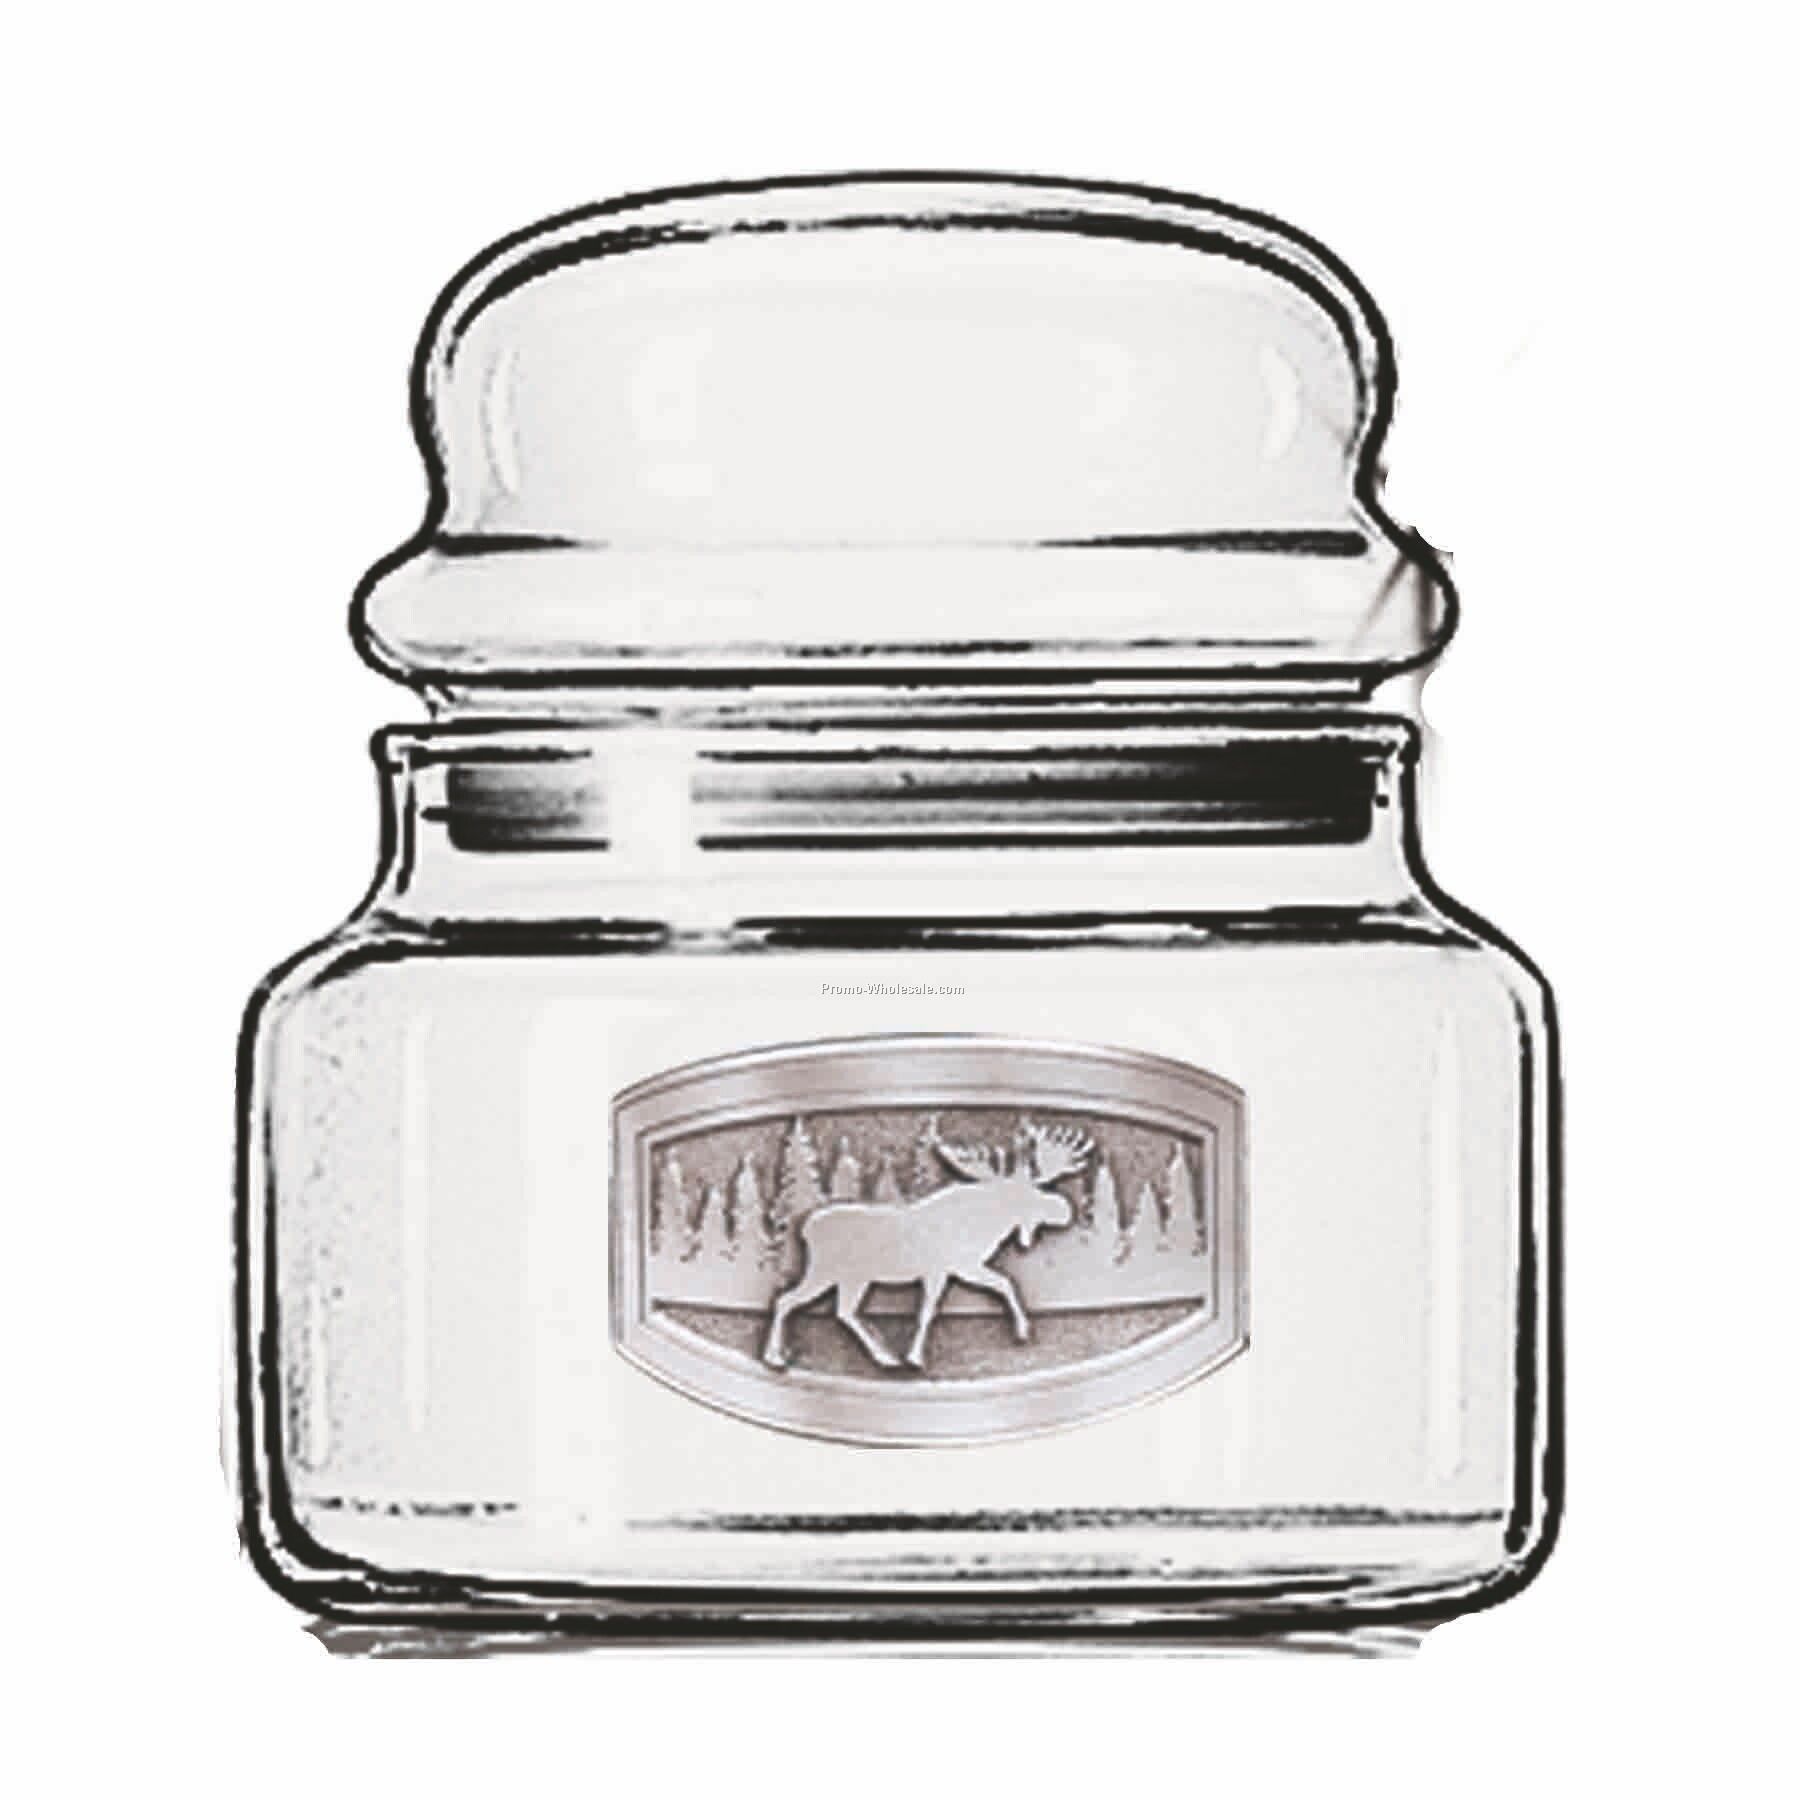 15 Oz. Optical Crystal Candy Jar (Pewter Emblem)